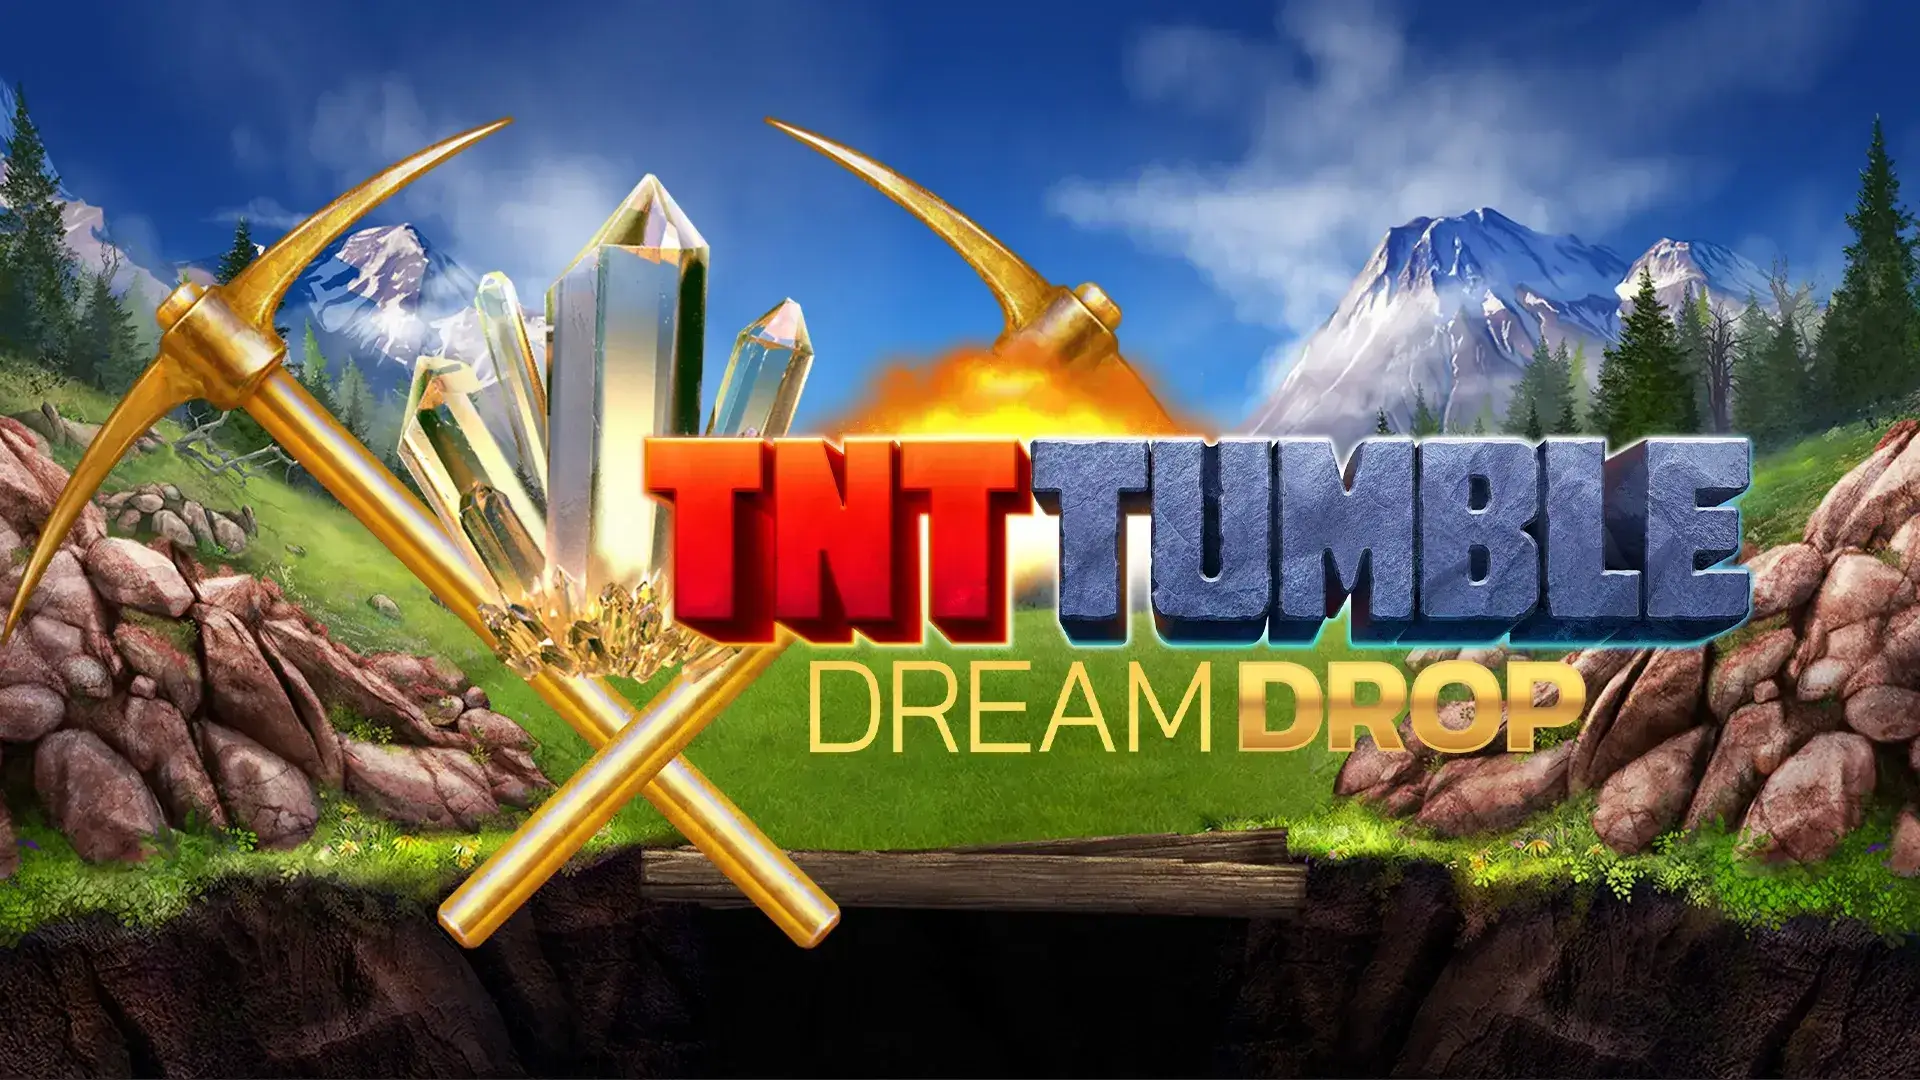 TNT Tumble Dream Drop  - Emirates Casino Slot Review